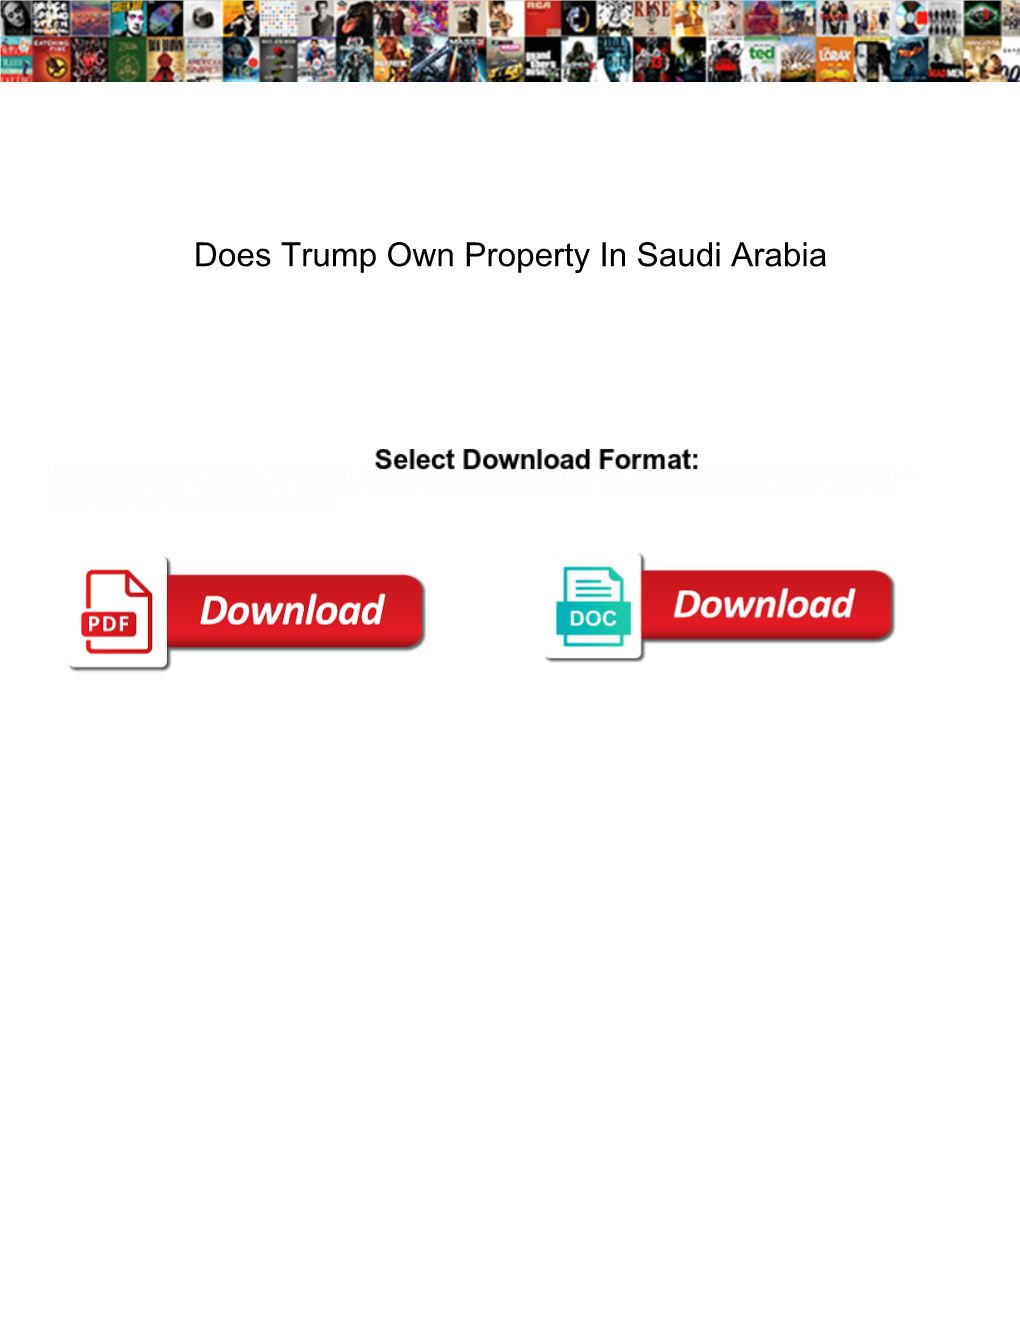 Does Trump Own Property in Saudi Arabia